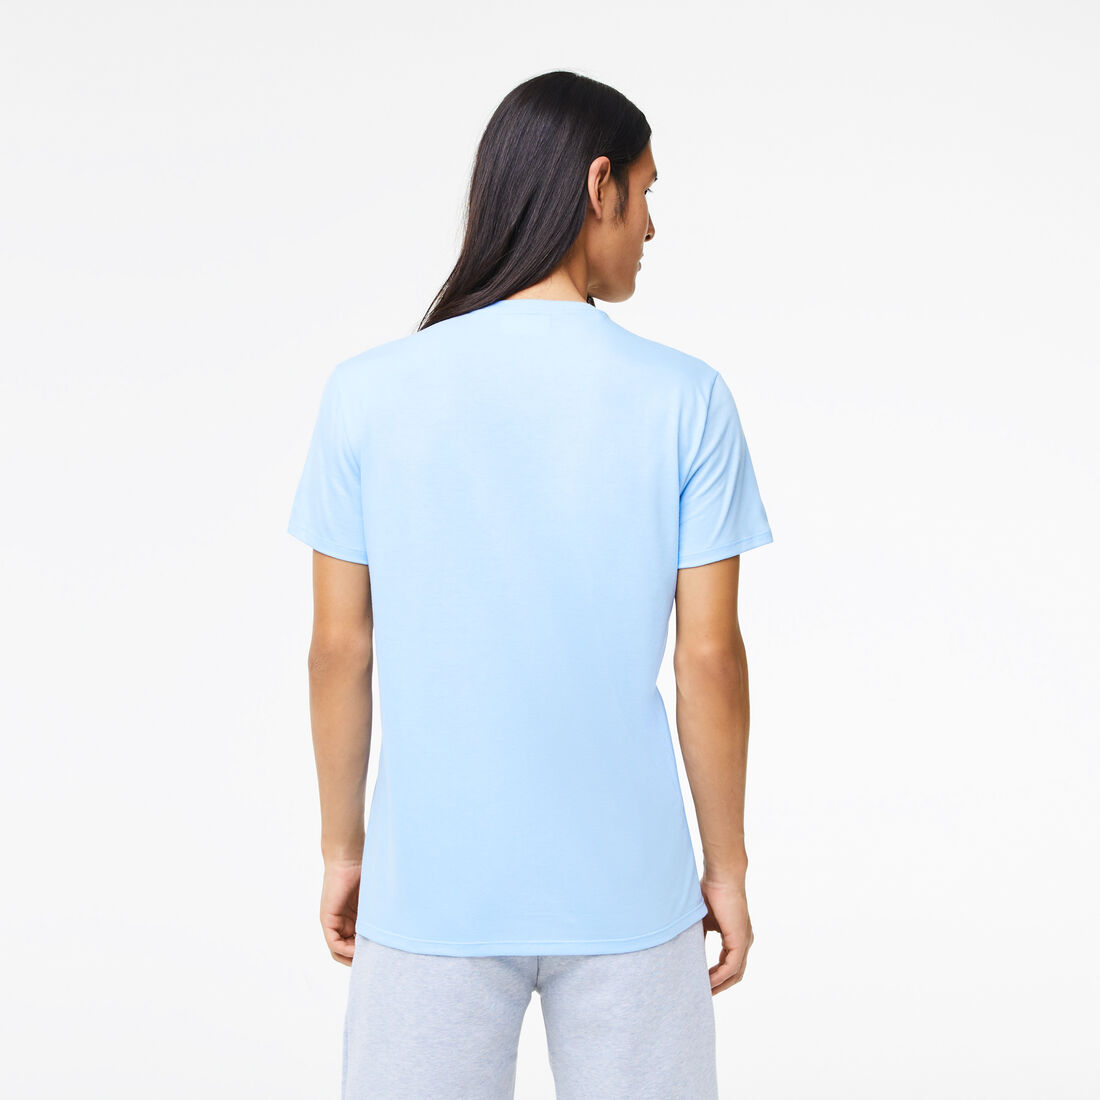 Lacoste - Pima Cotton Jersey T-Shirt, Crew Neck - Light Blue